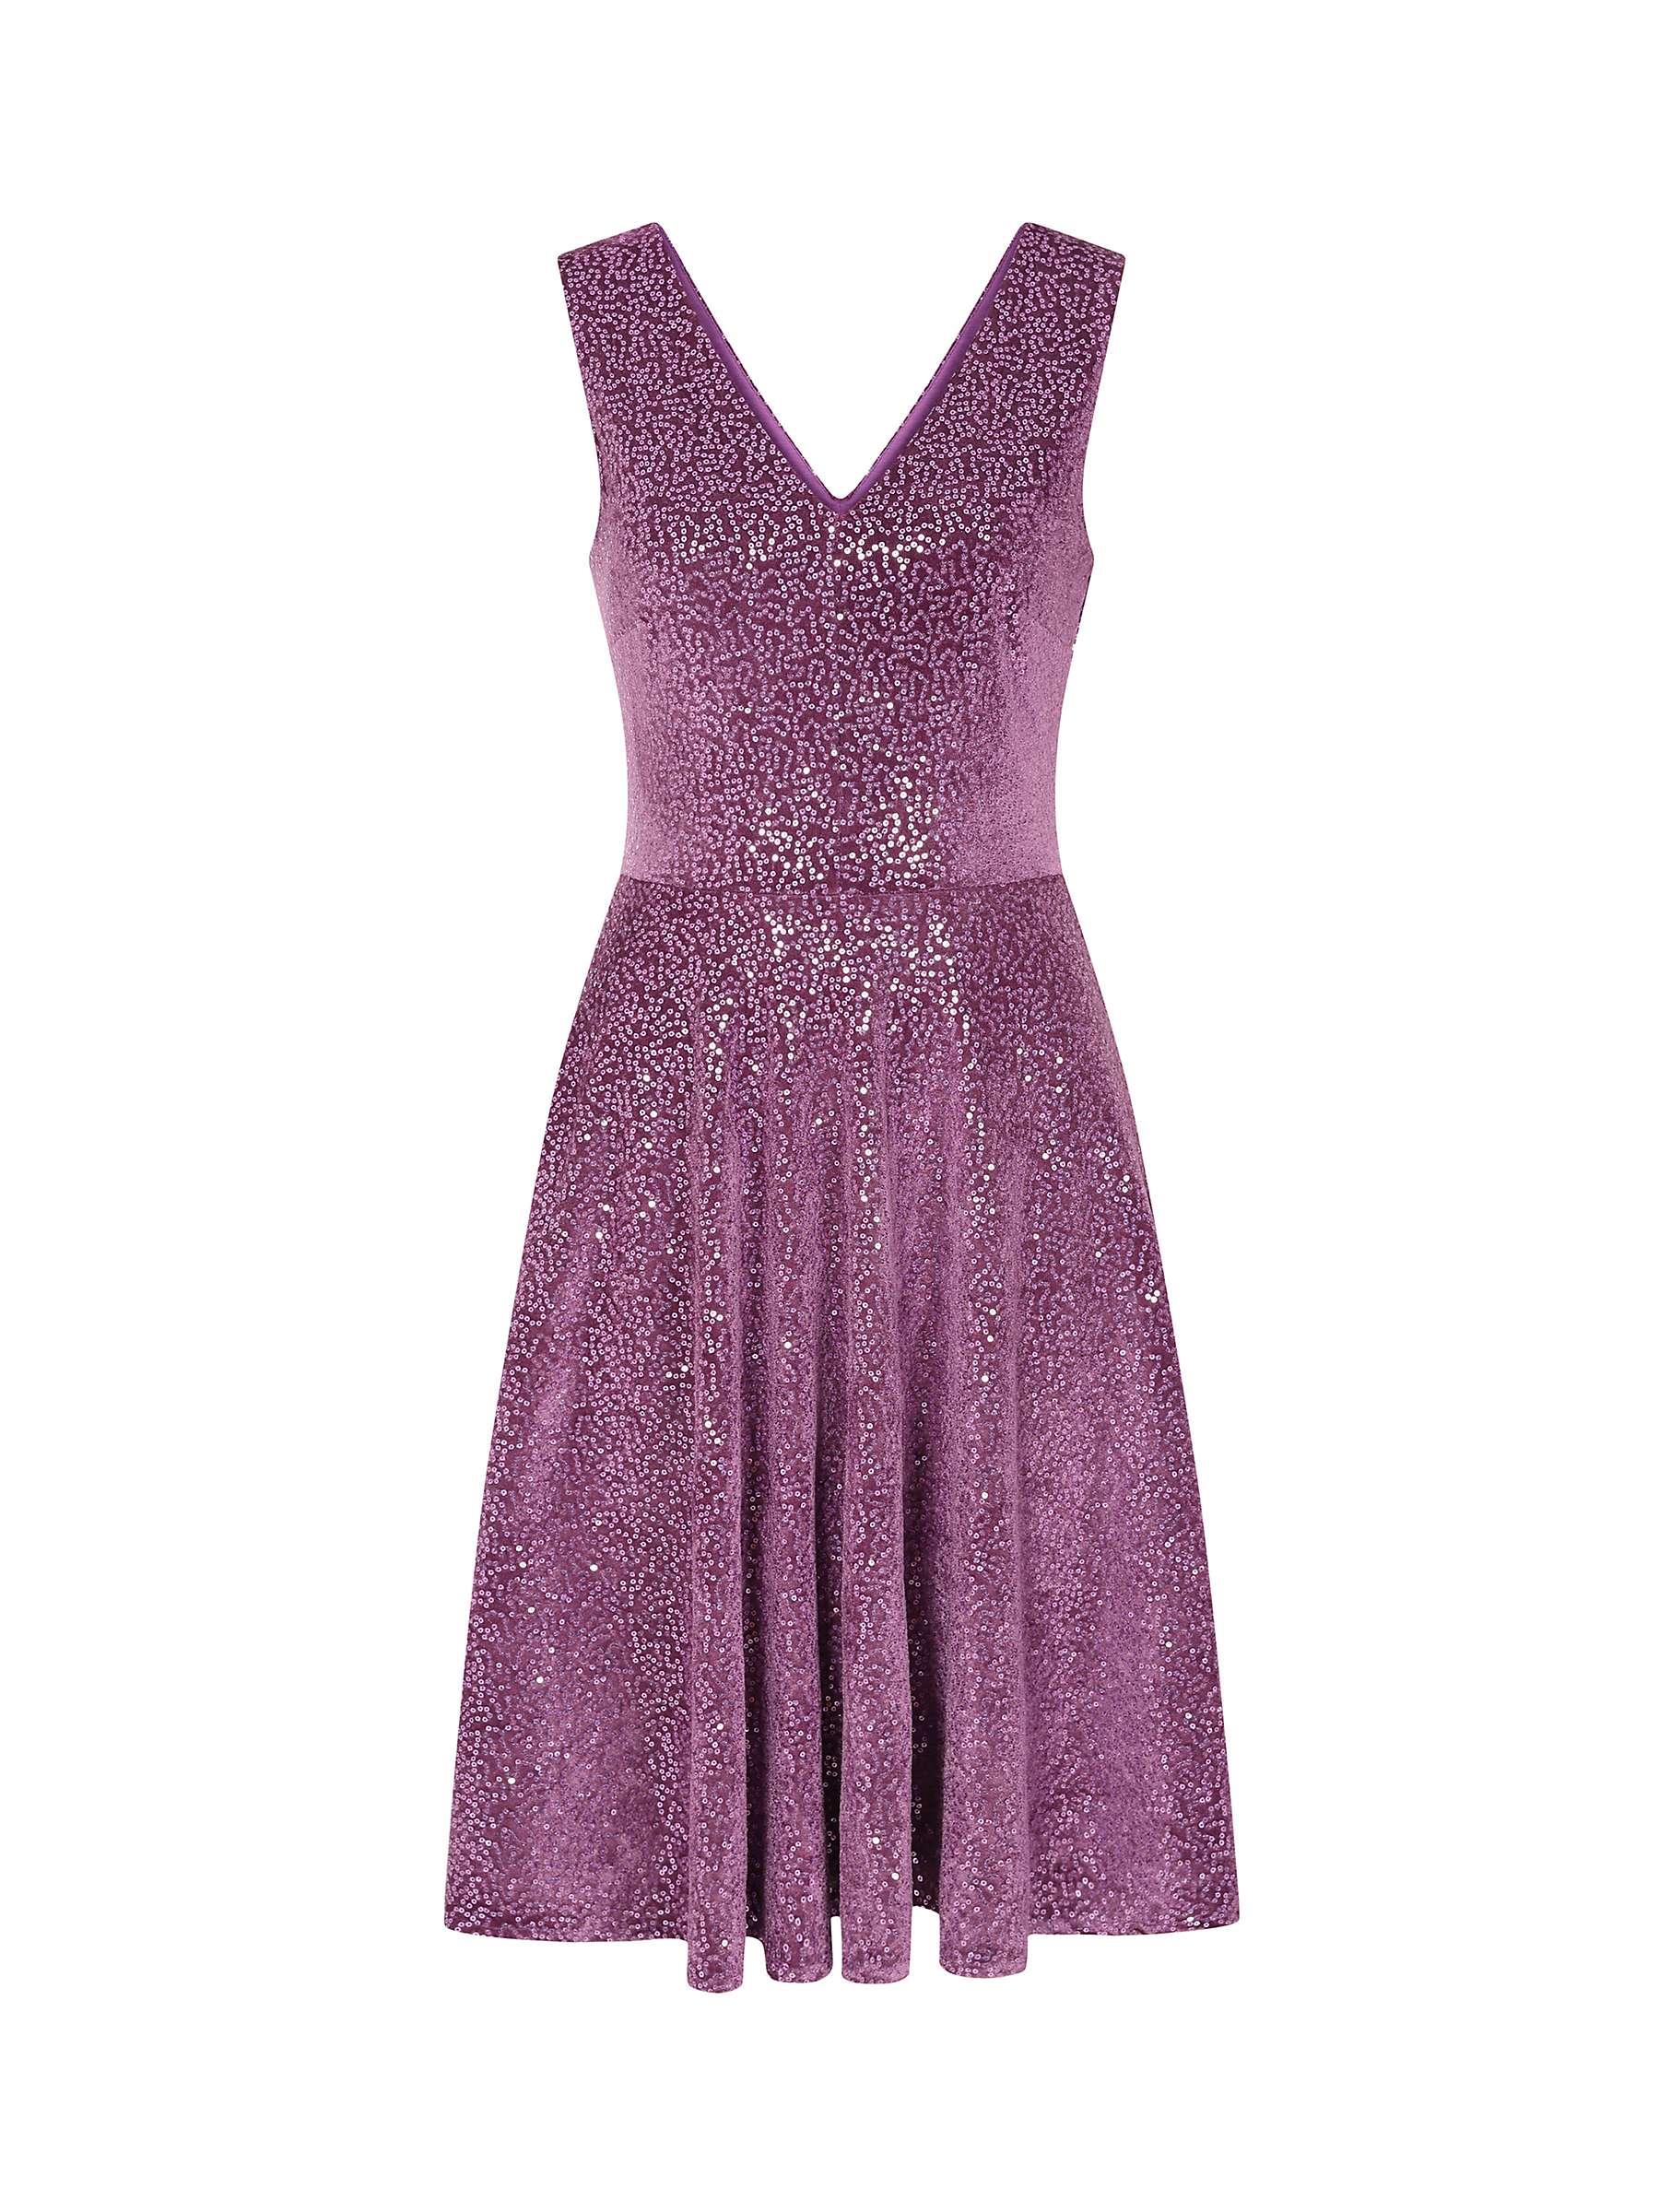 Buy HotSquash Velvet Sequin Fit and Flare Dress Online at johnlewis.com